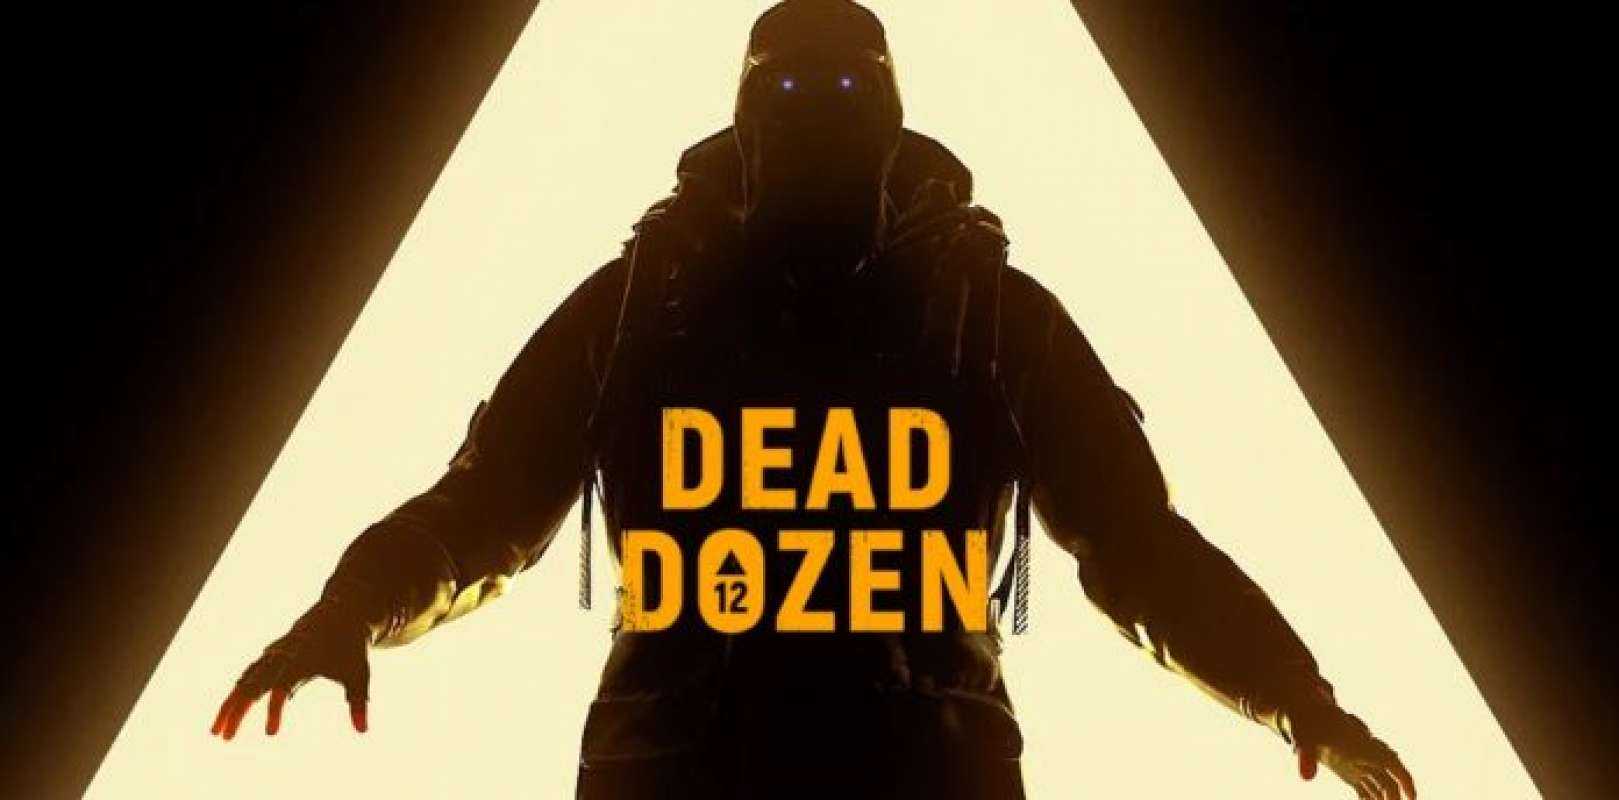 Dead Dozen